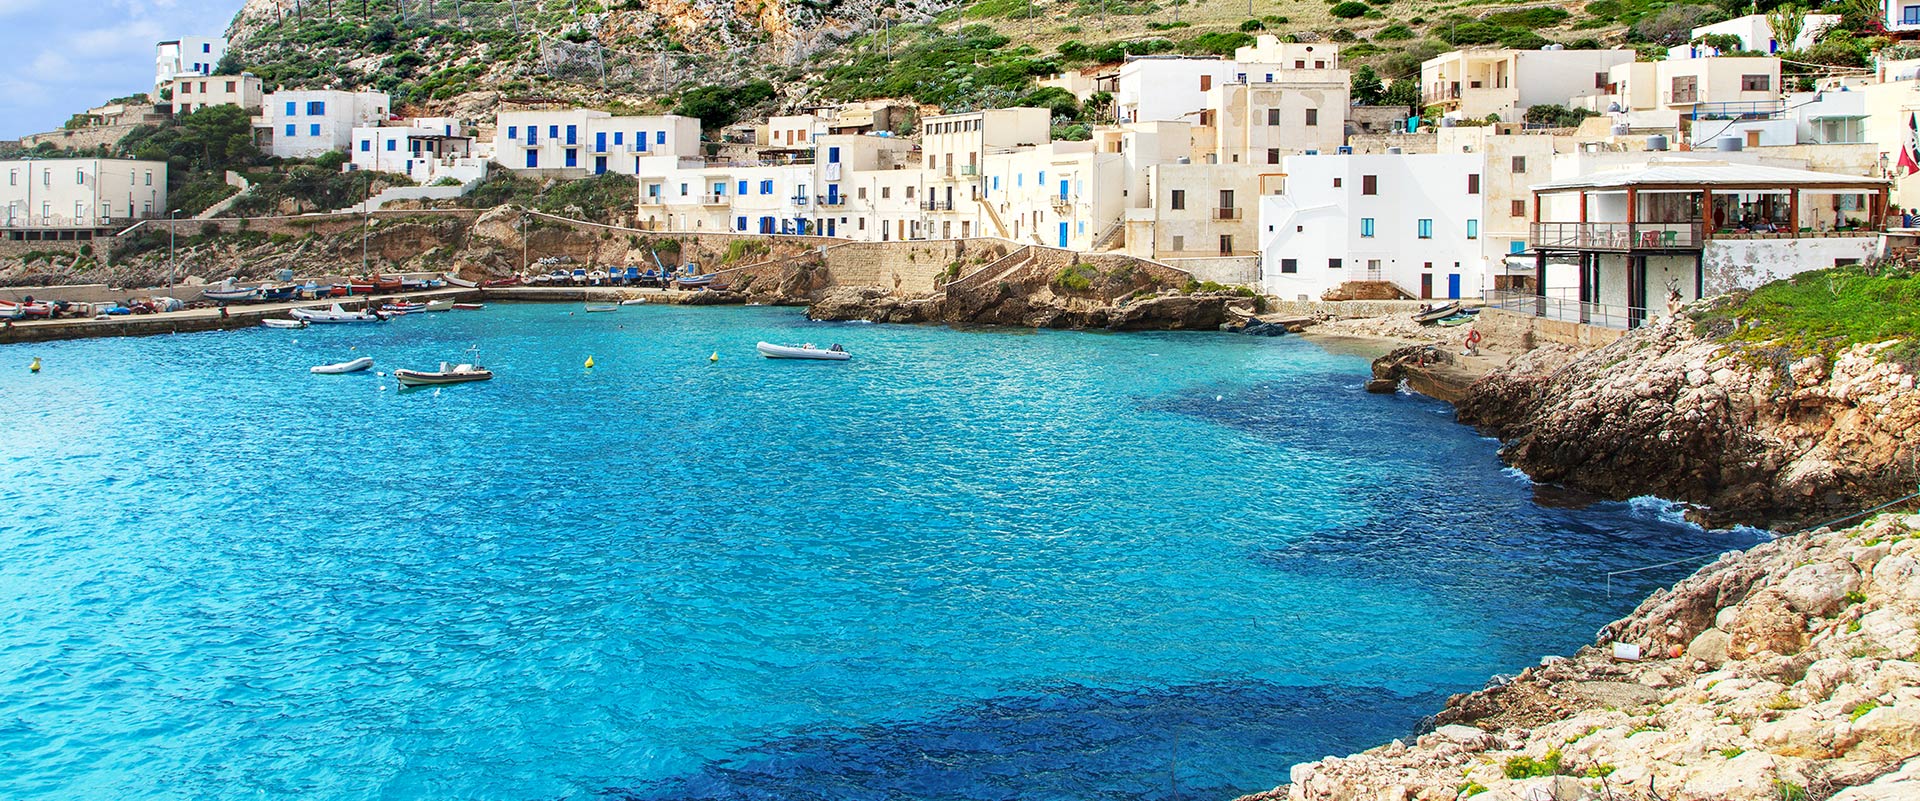 Aegadian Islands, Sicily: Sailing cruises